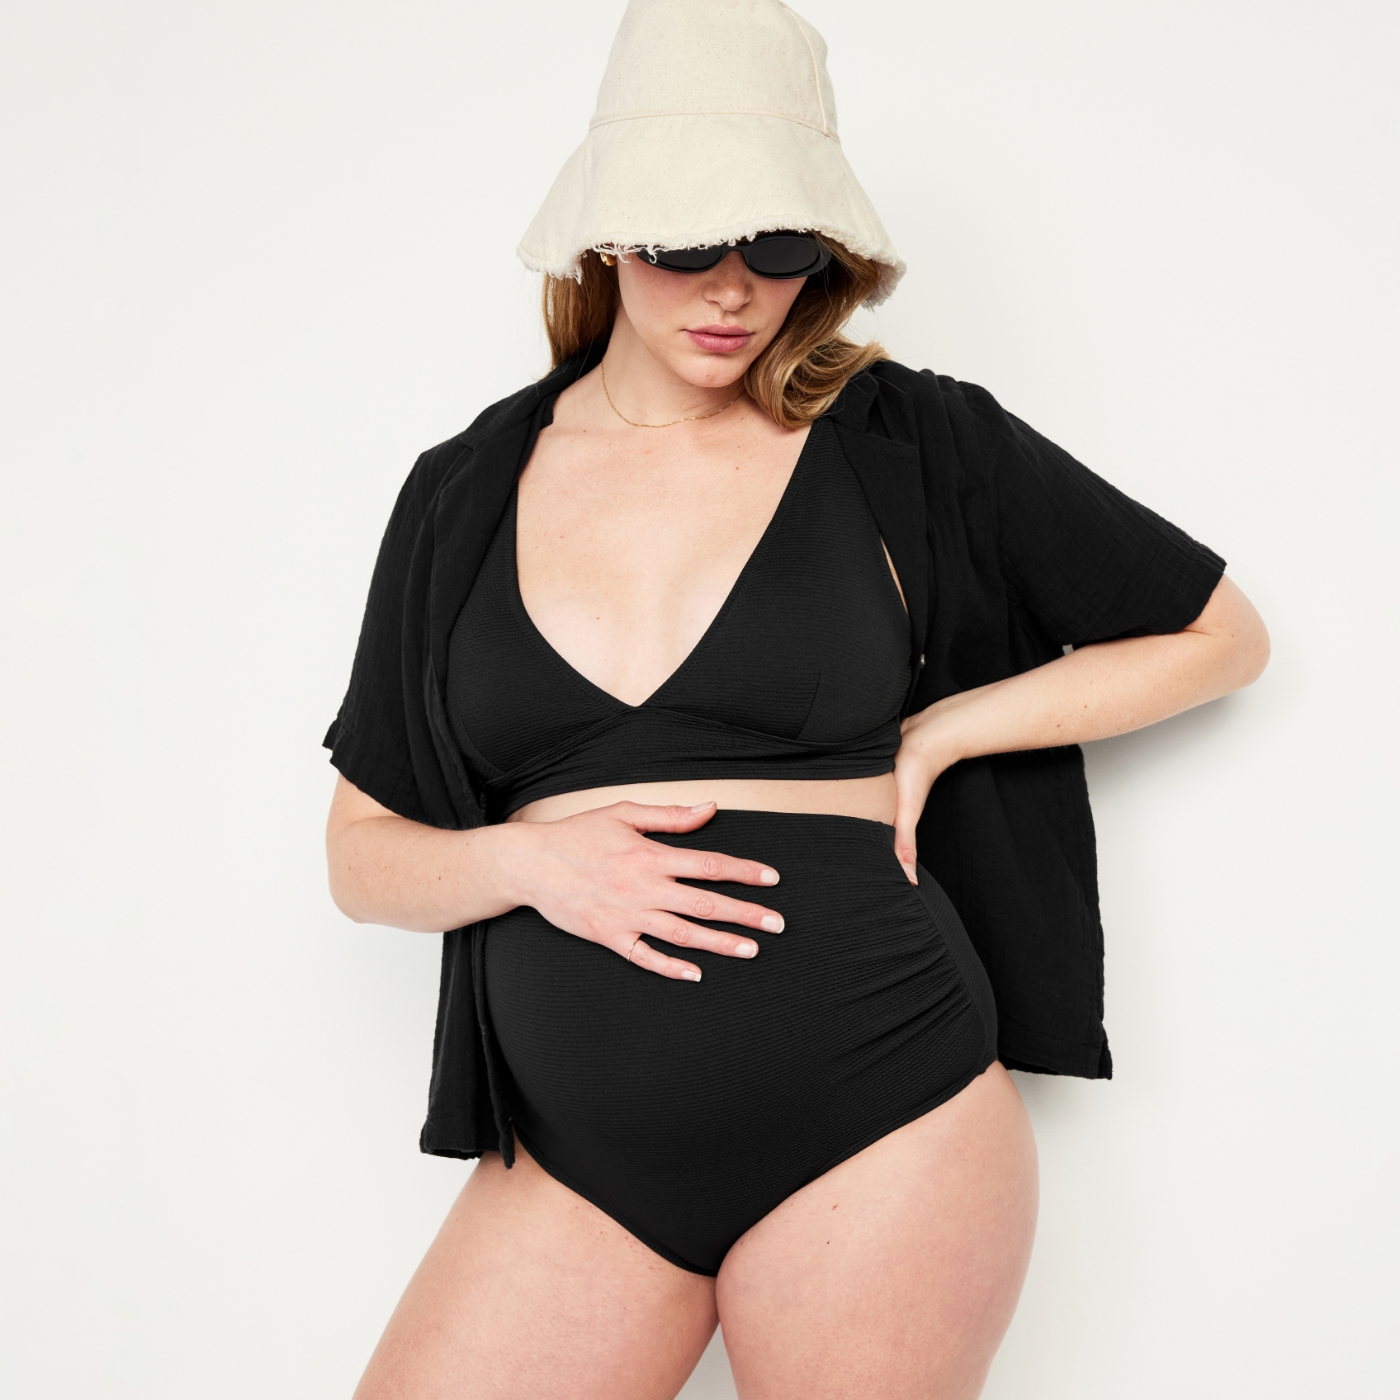 A maternity model dressed in beach attire.